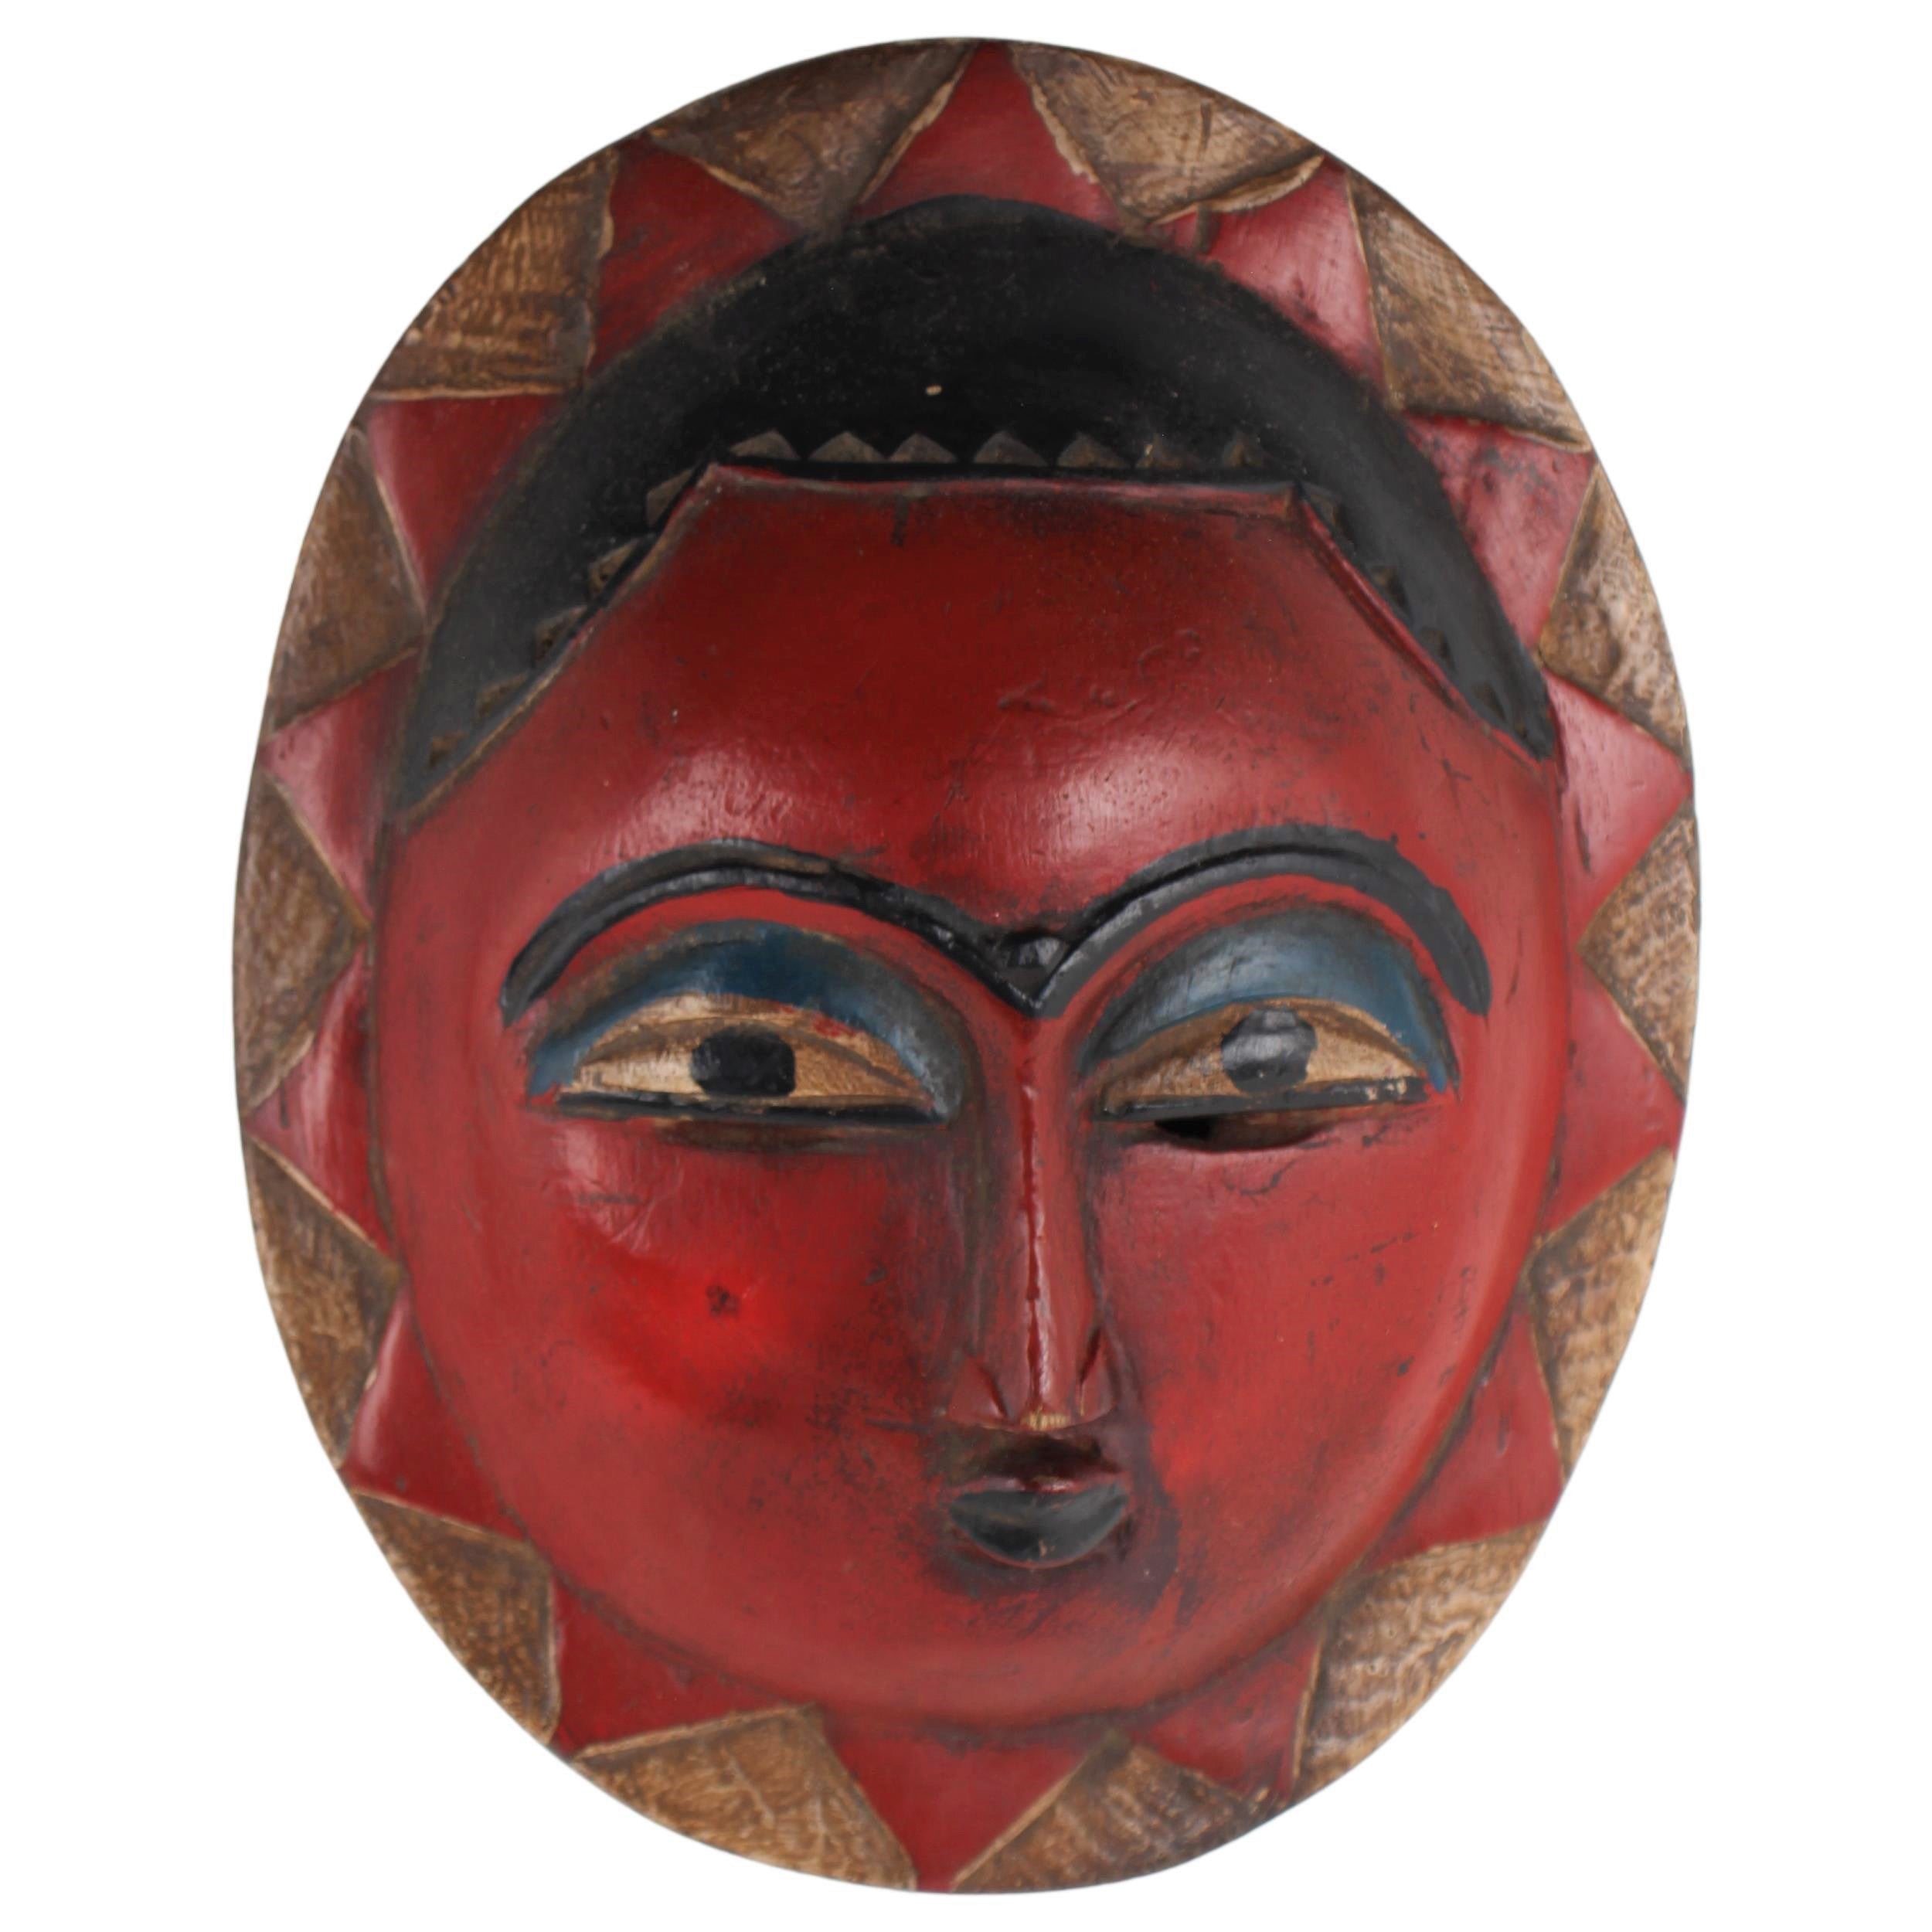 Eket Tribe Mask ~13.4" Tall - Mask